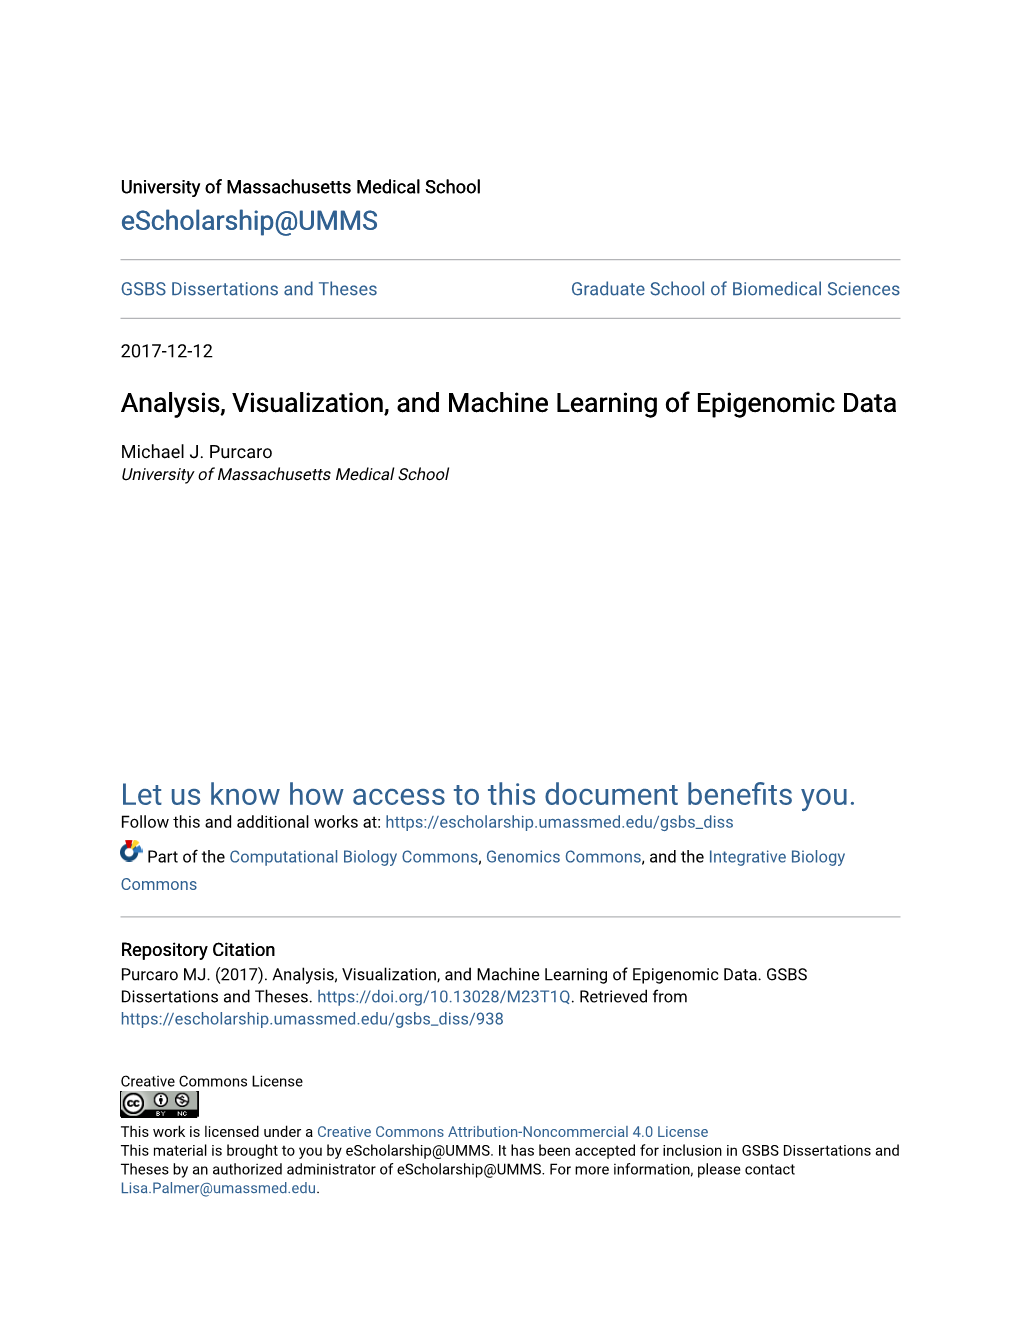 Analysis, Visualization, and Machine Learning of Epigenomic Data